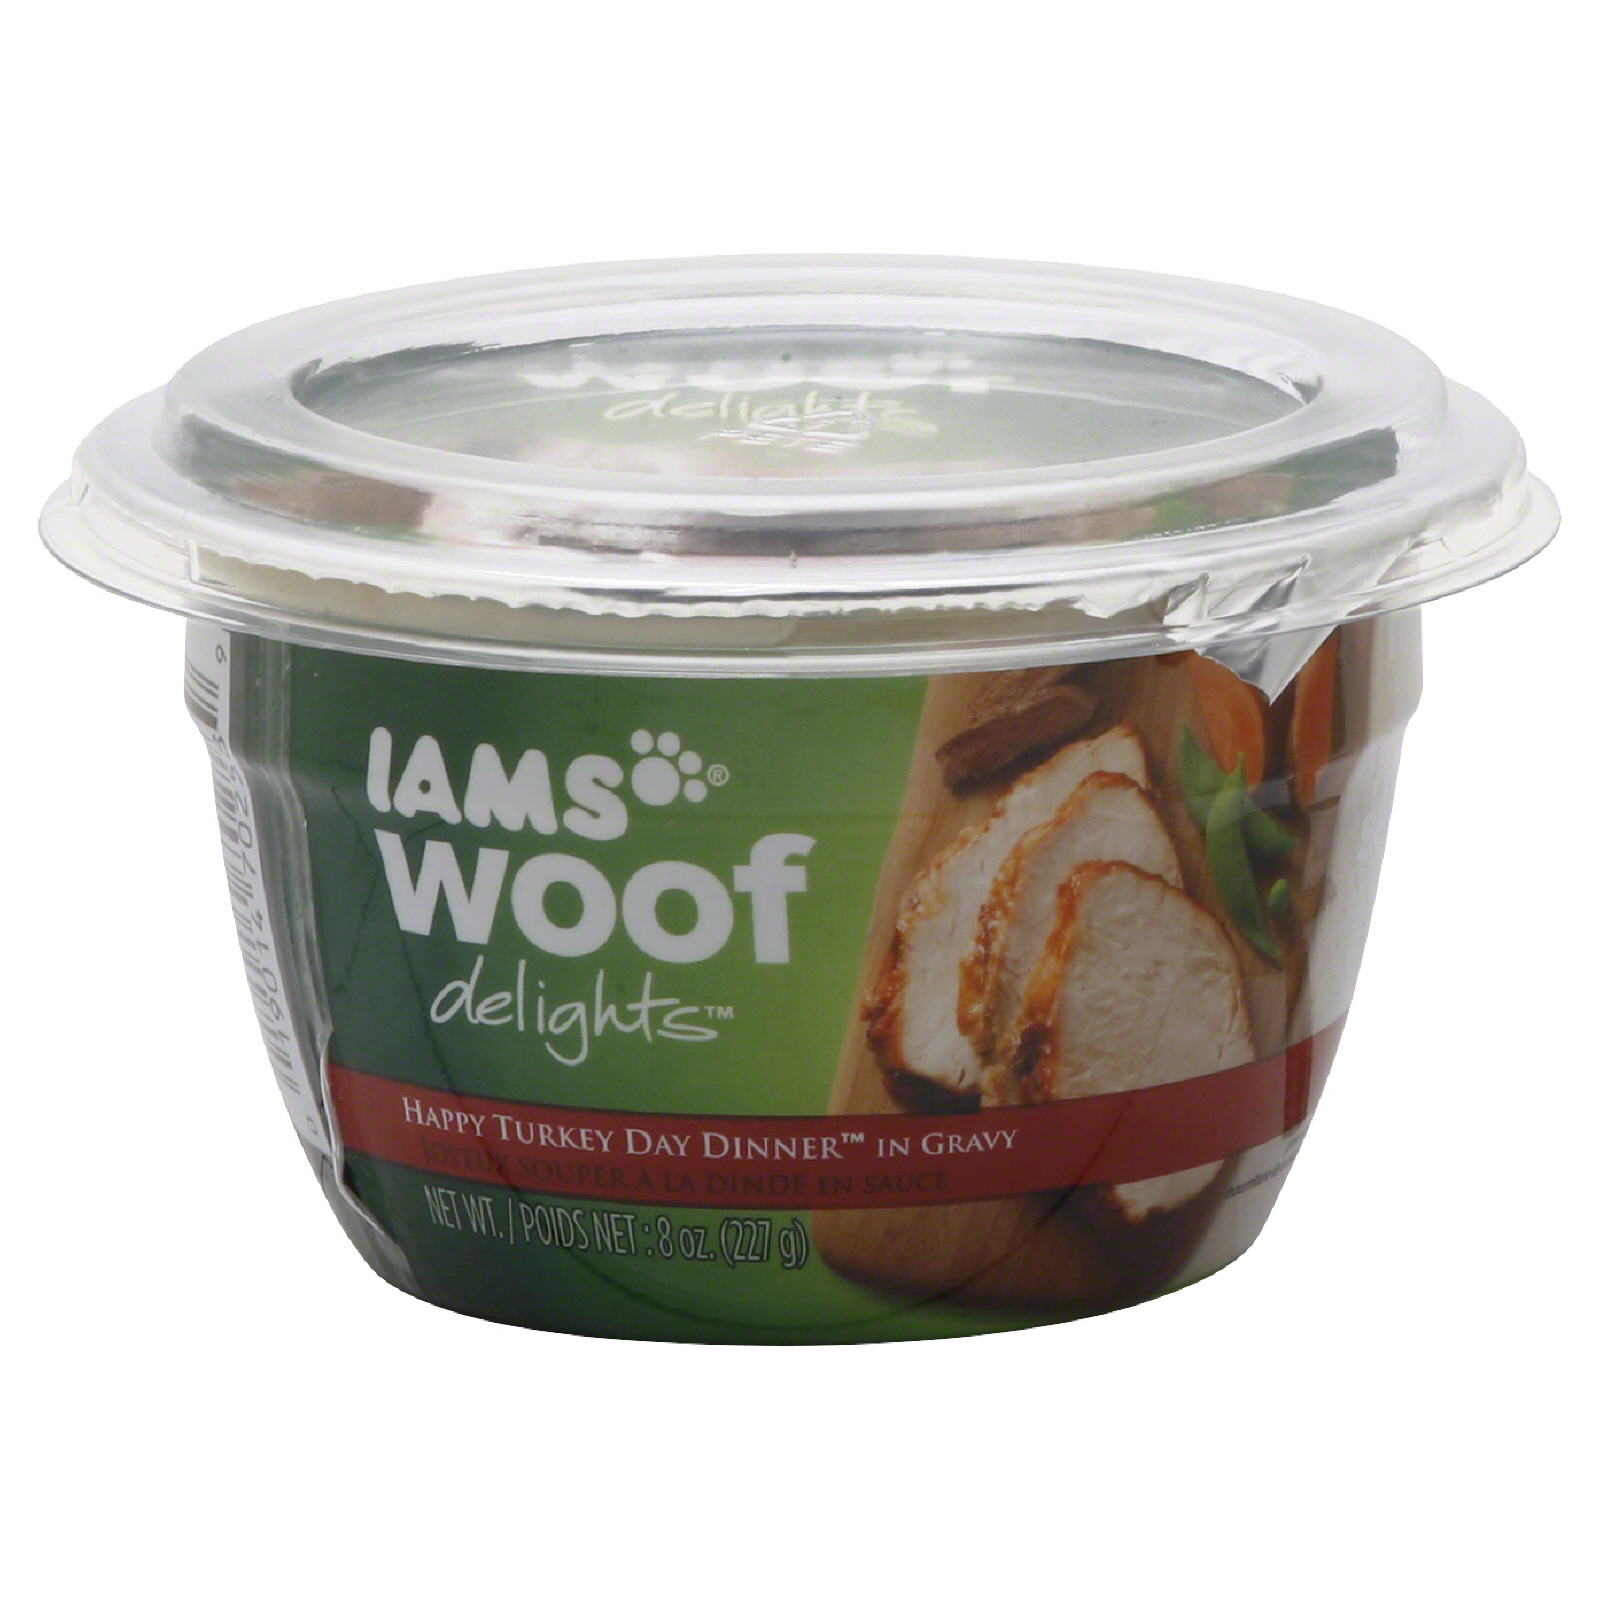 Iams Woof Delights Dog Food, Premium, Happy Turkey Day Dinner in Gravy, 8 oz